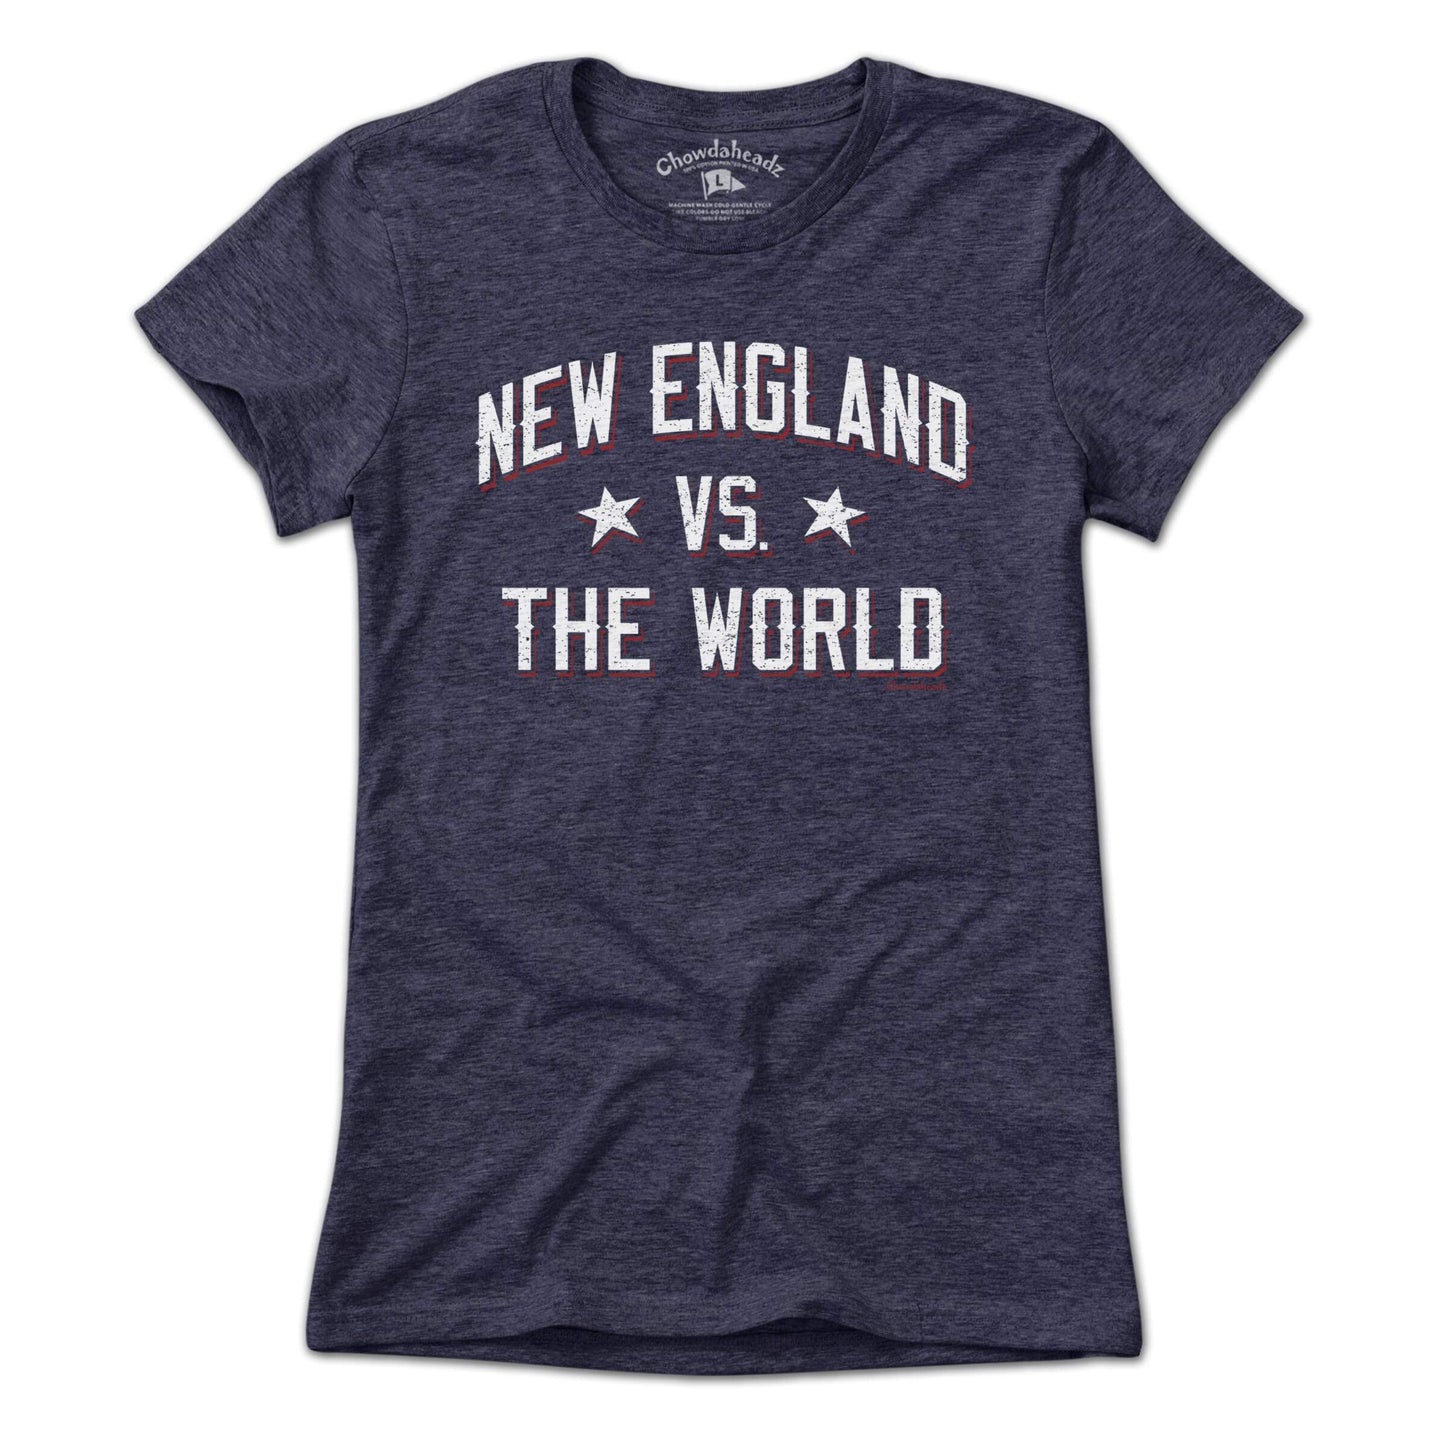 New England vs The World T-Shirt - Chowdaheadz